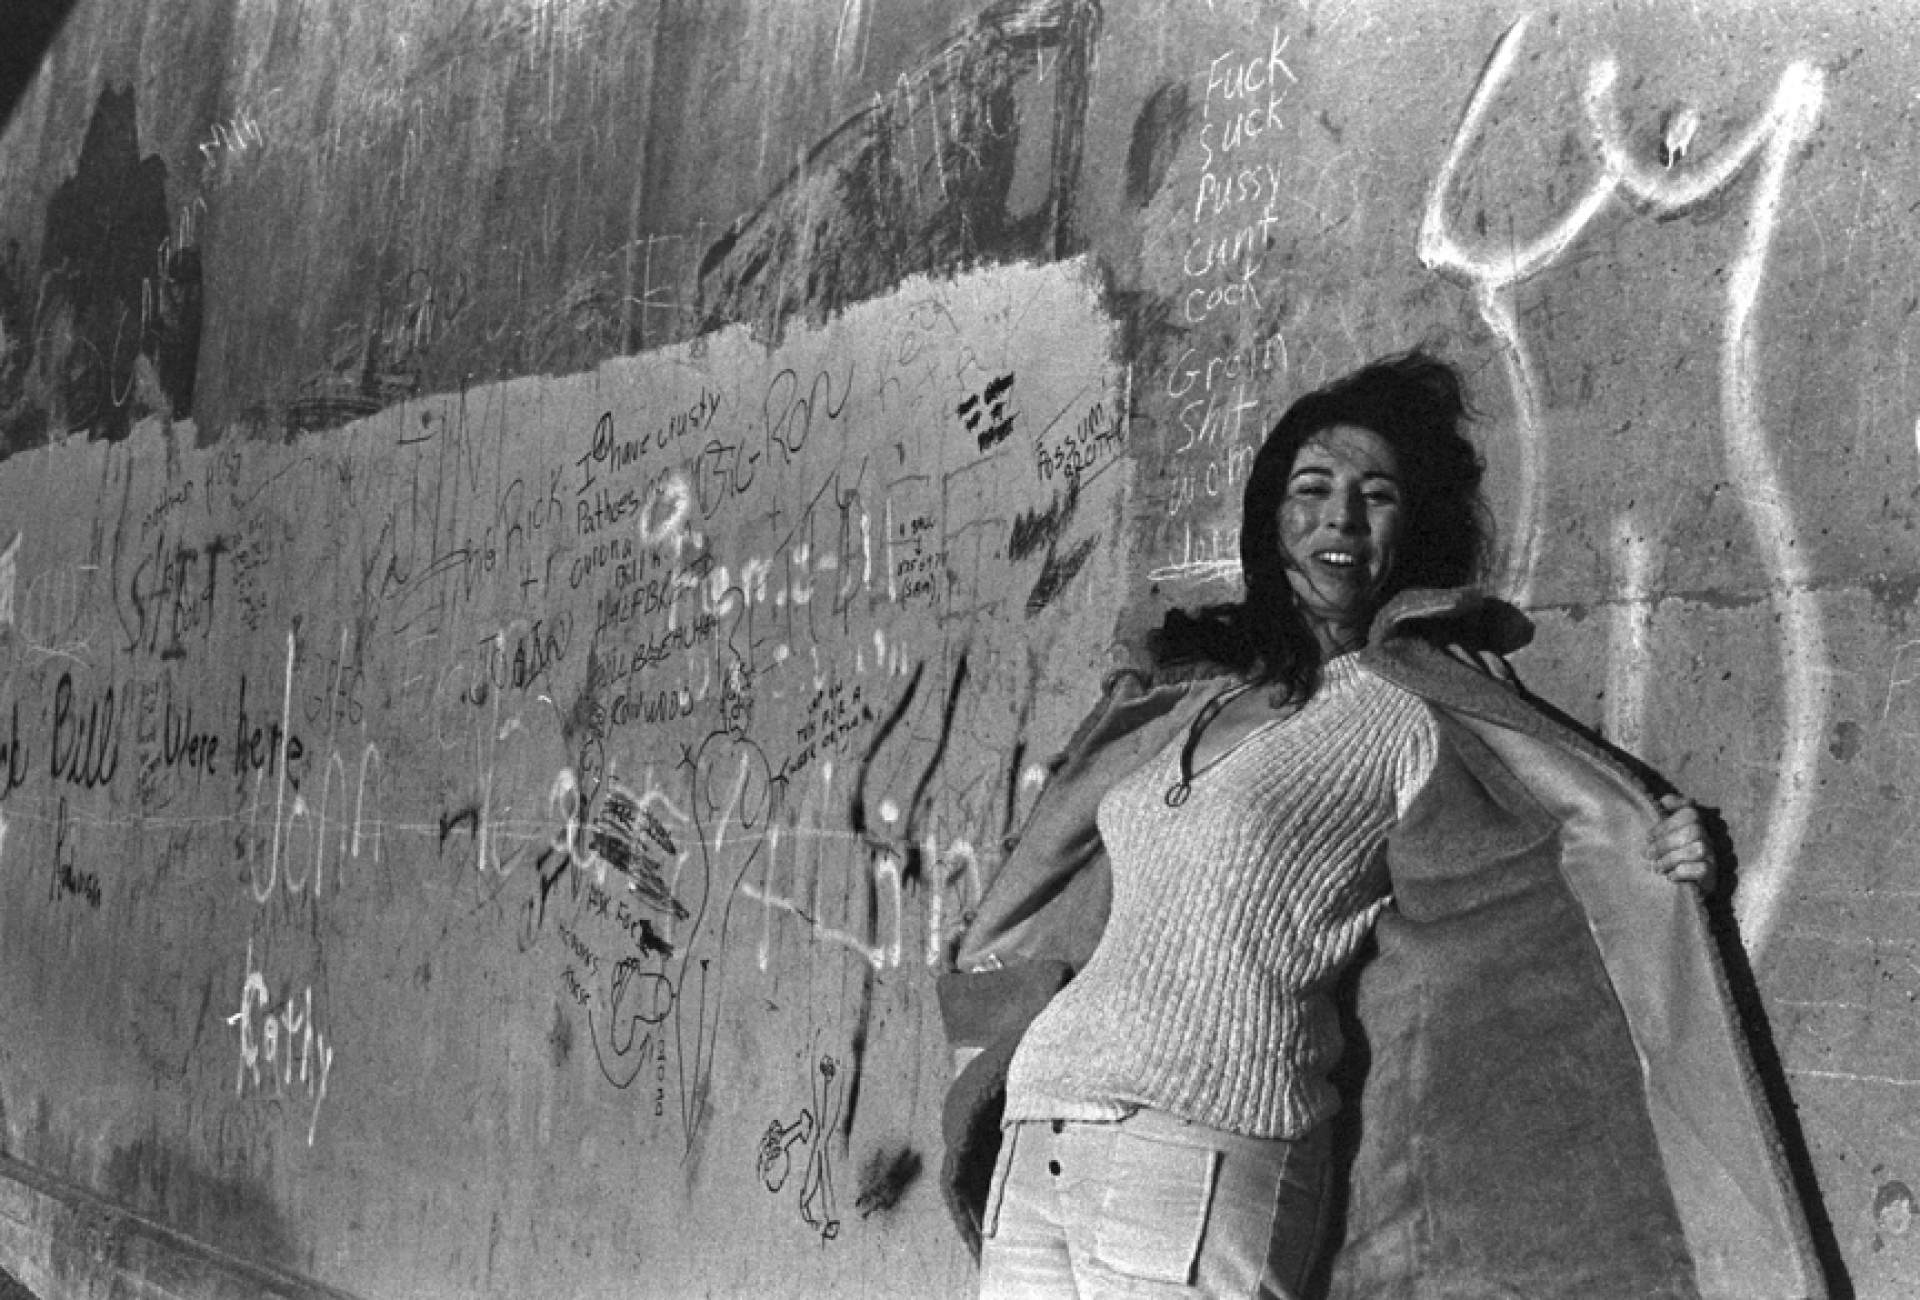 Diane and the Graffiti